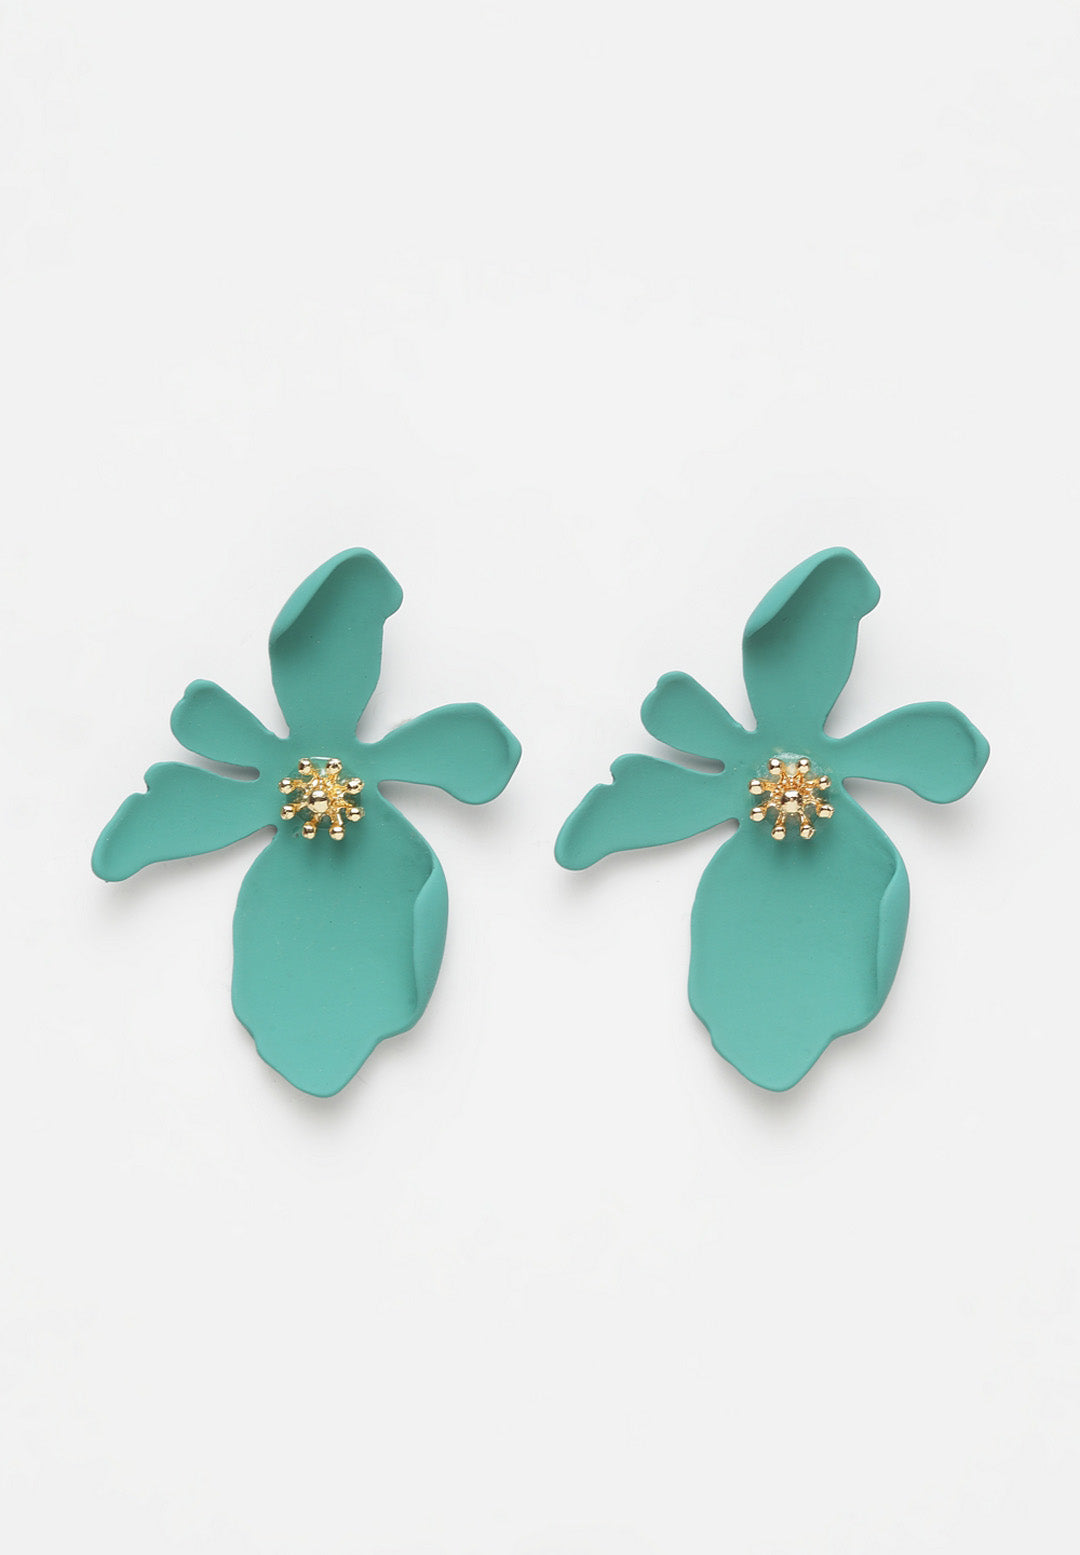 Avant-Garde Paris Beautifully Crafted Acrylic Floral Earrings